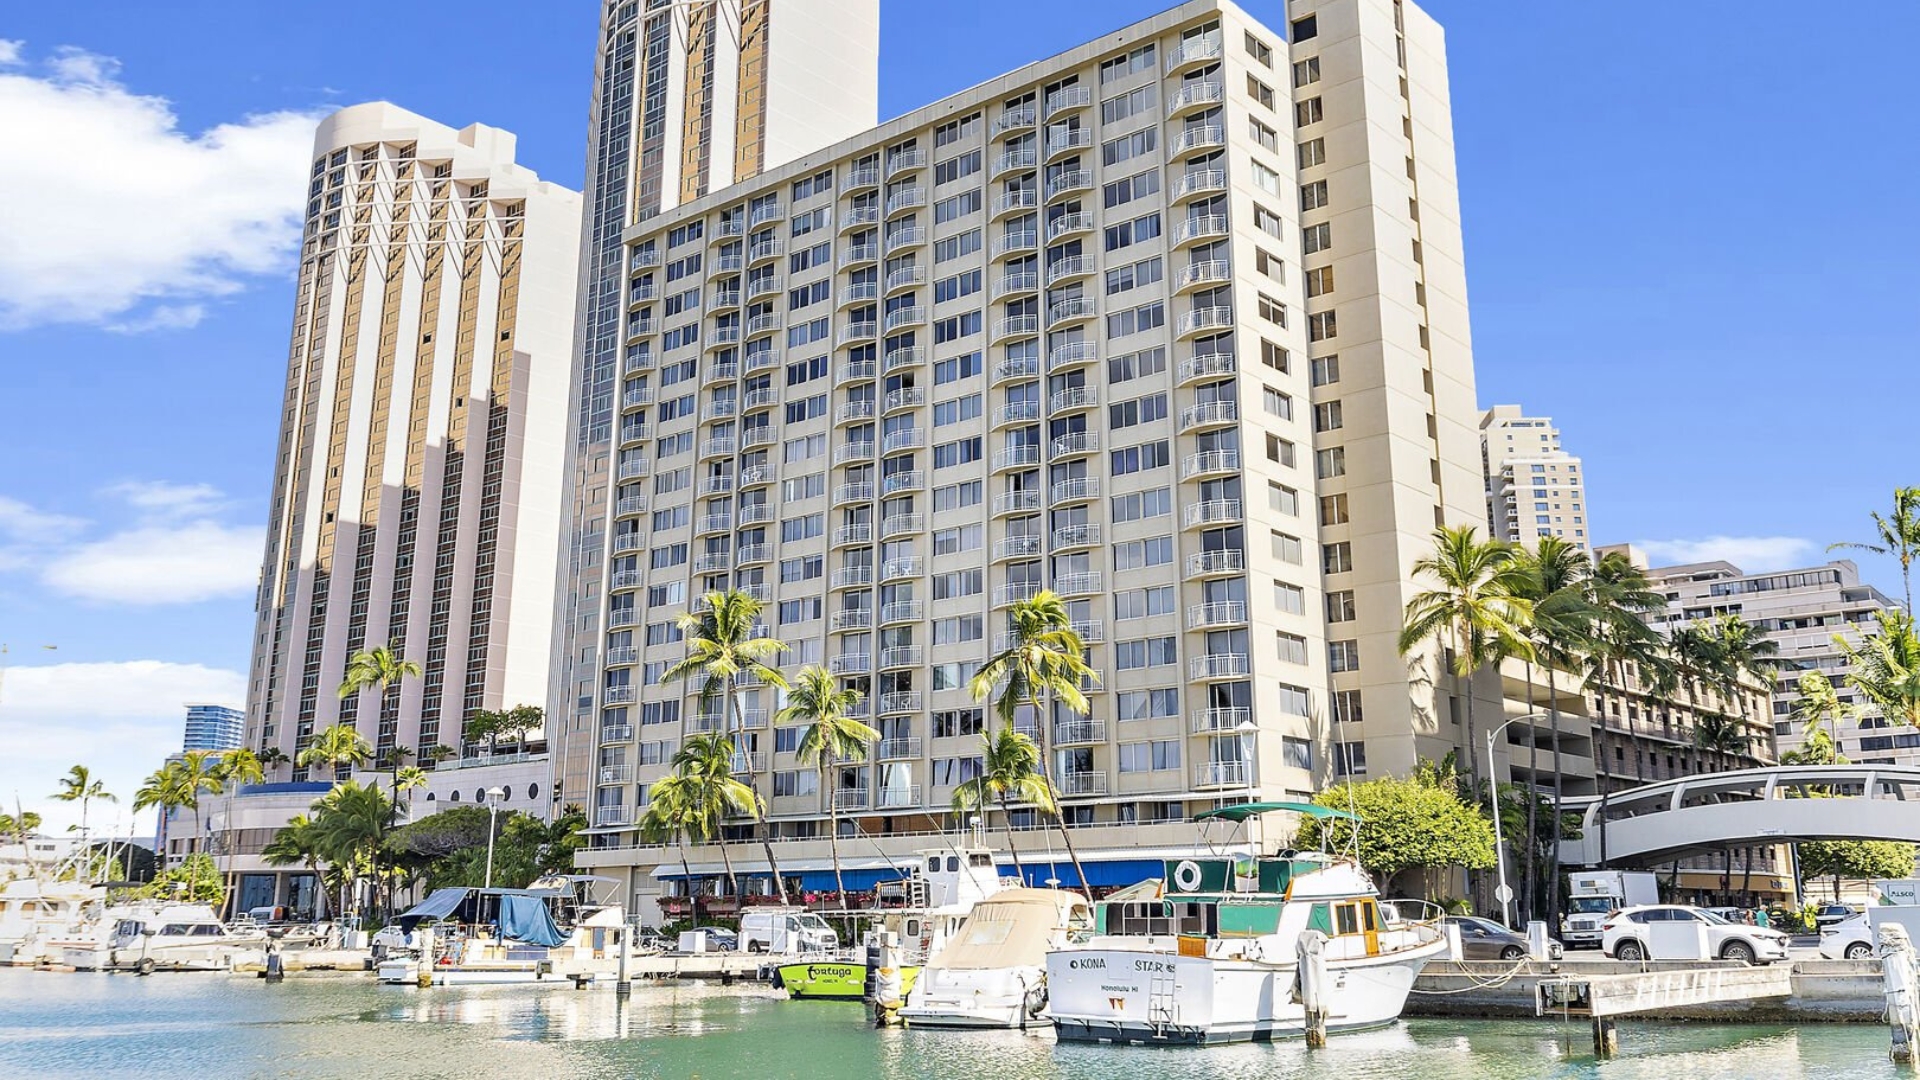 Ilikai Marina - Legal Vacation Rentals in Waikiki